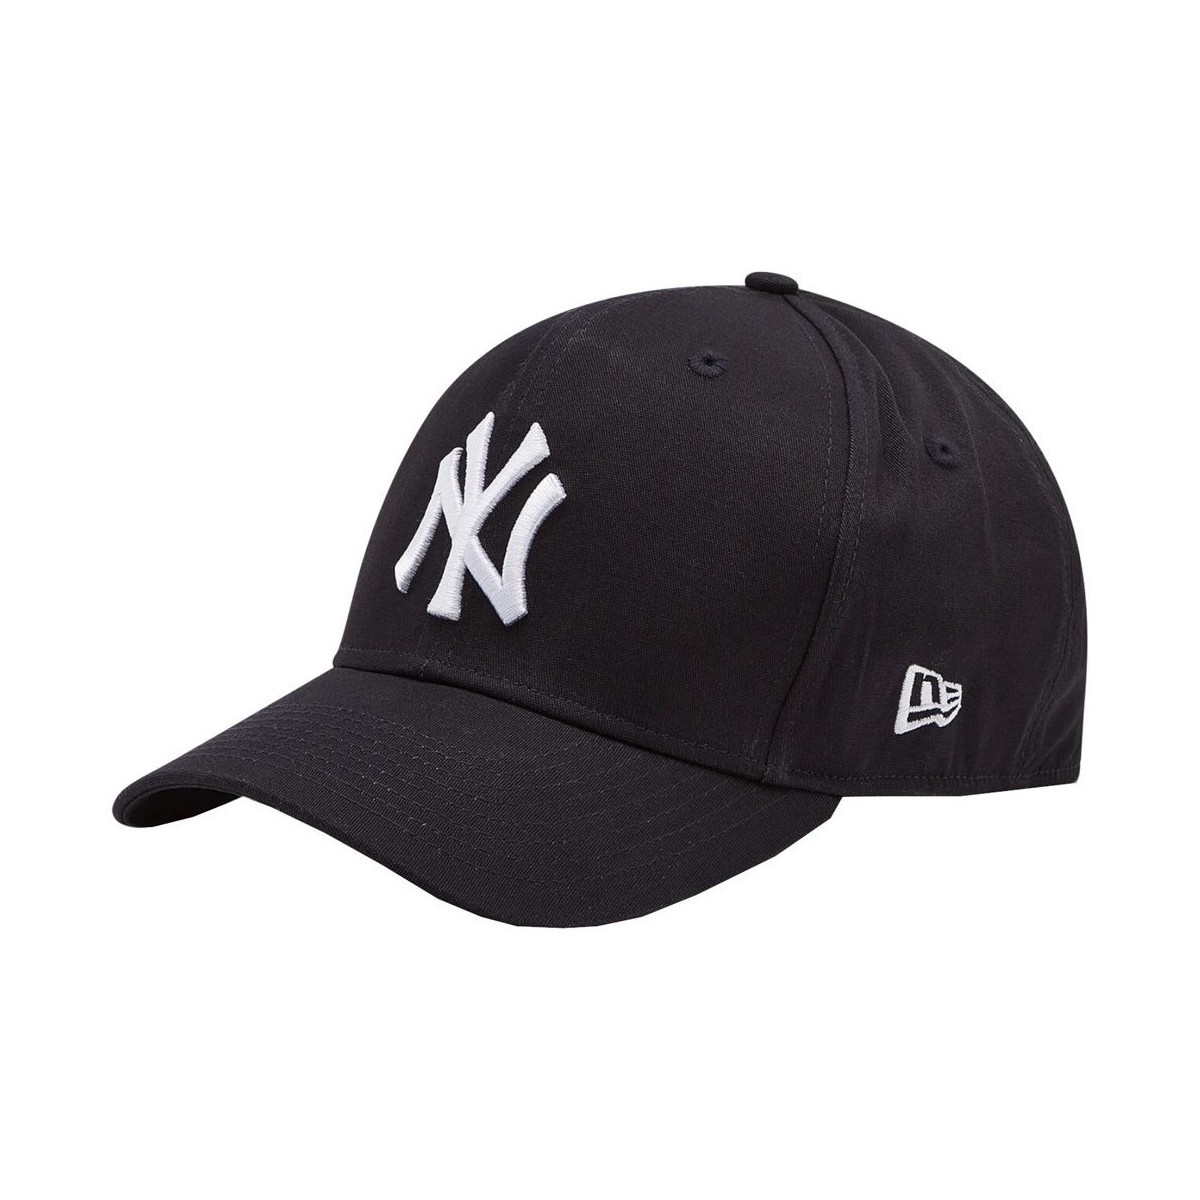 Accessories Herre Kasketter New-Era 9FIFTY New York Yankees Sort